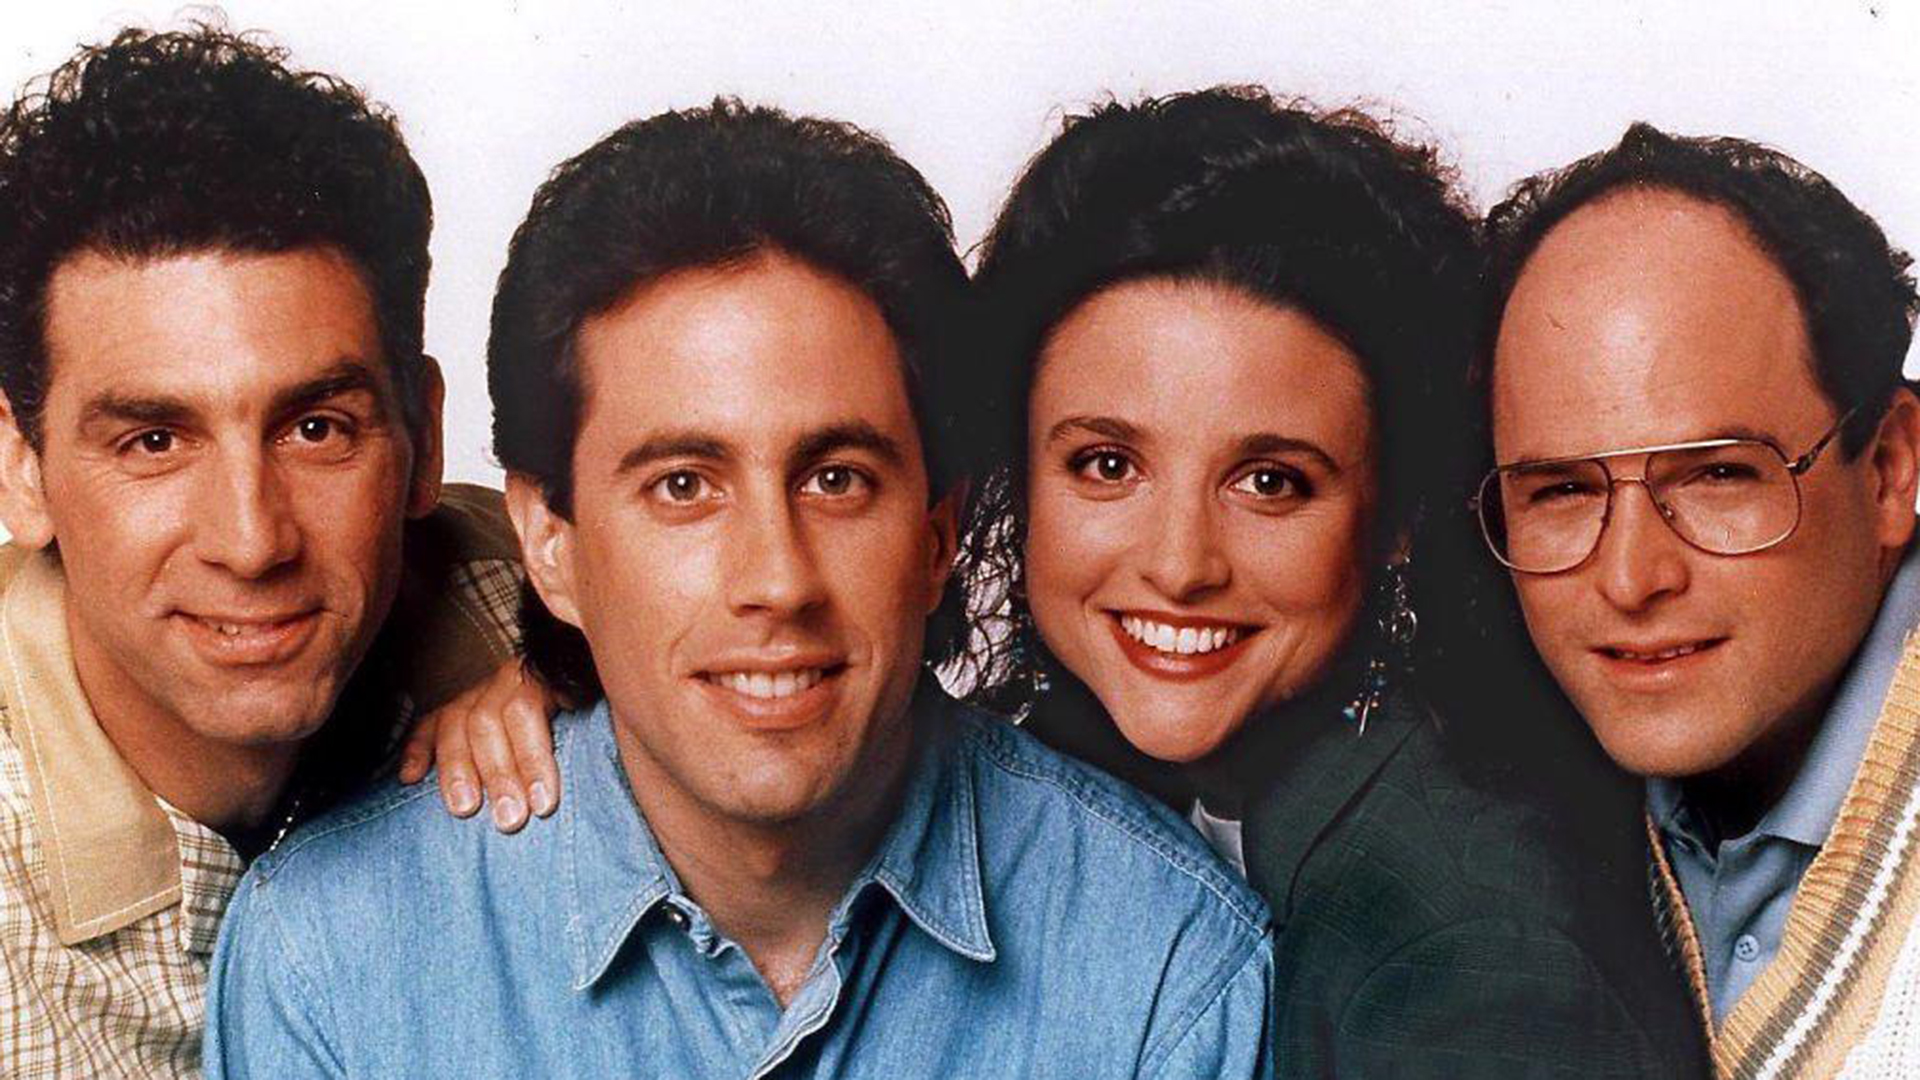 Seinfeld' turns 25